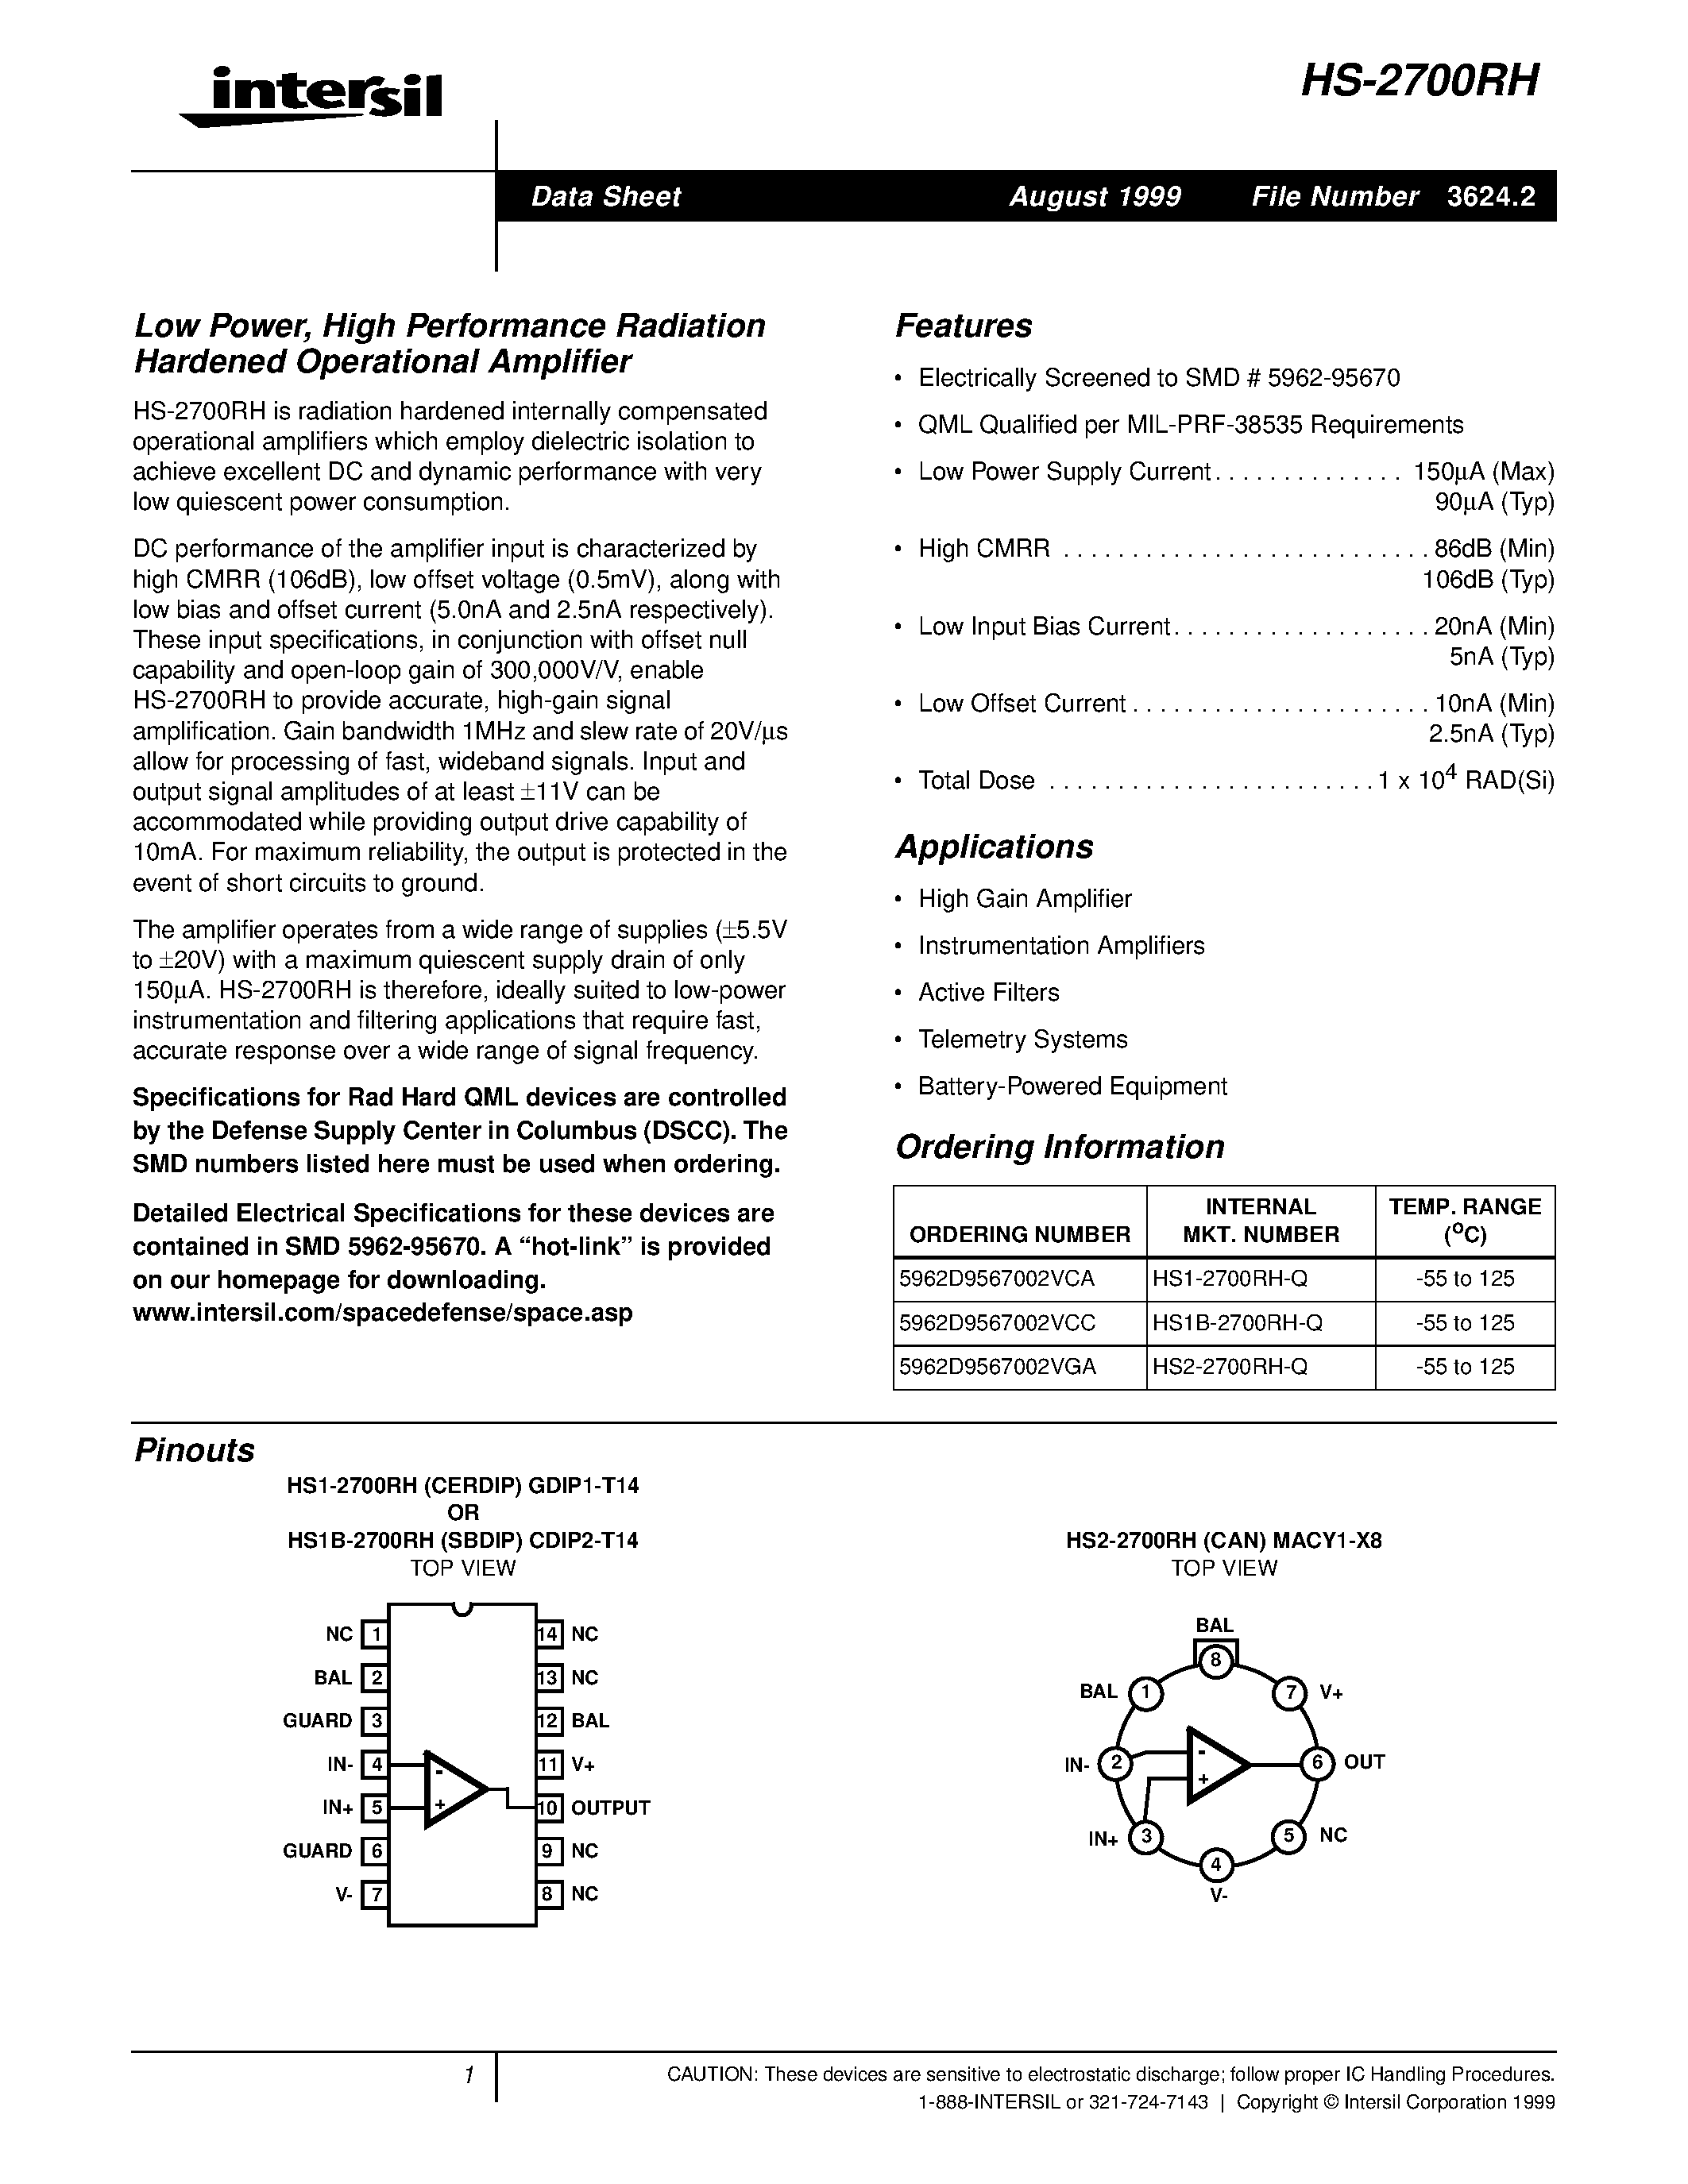 Даташит HS1-2700RH-Q - Low Power/ High Performance Radiation Hardened Operational Amplifier страница 1